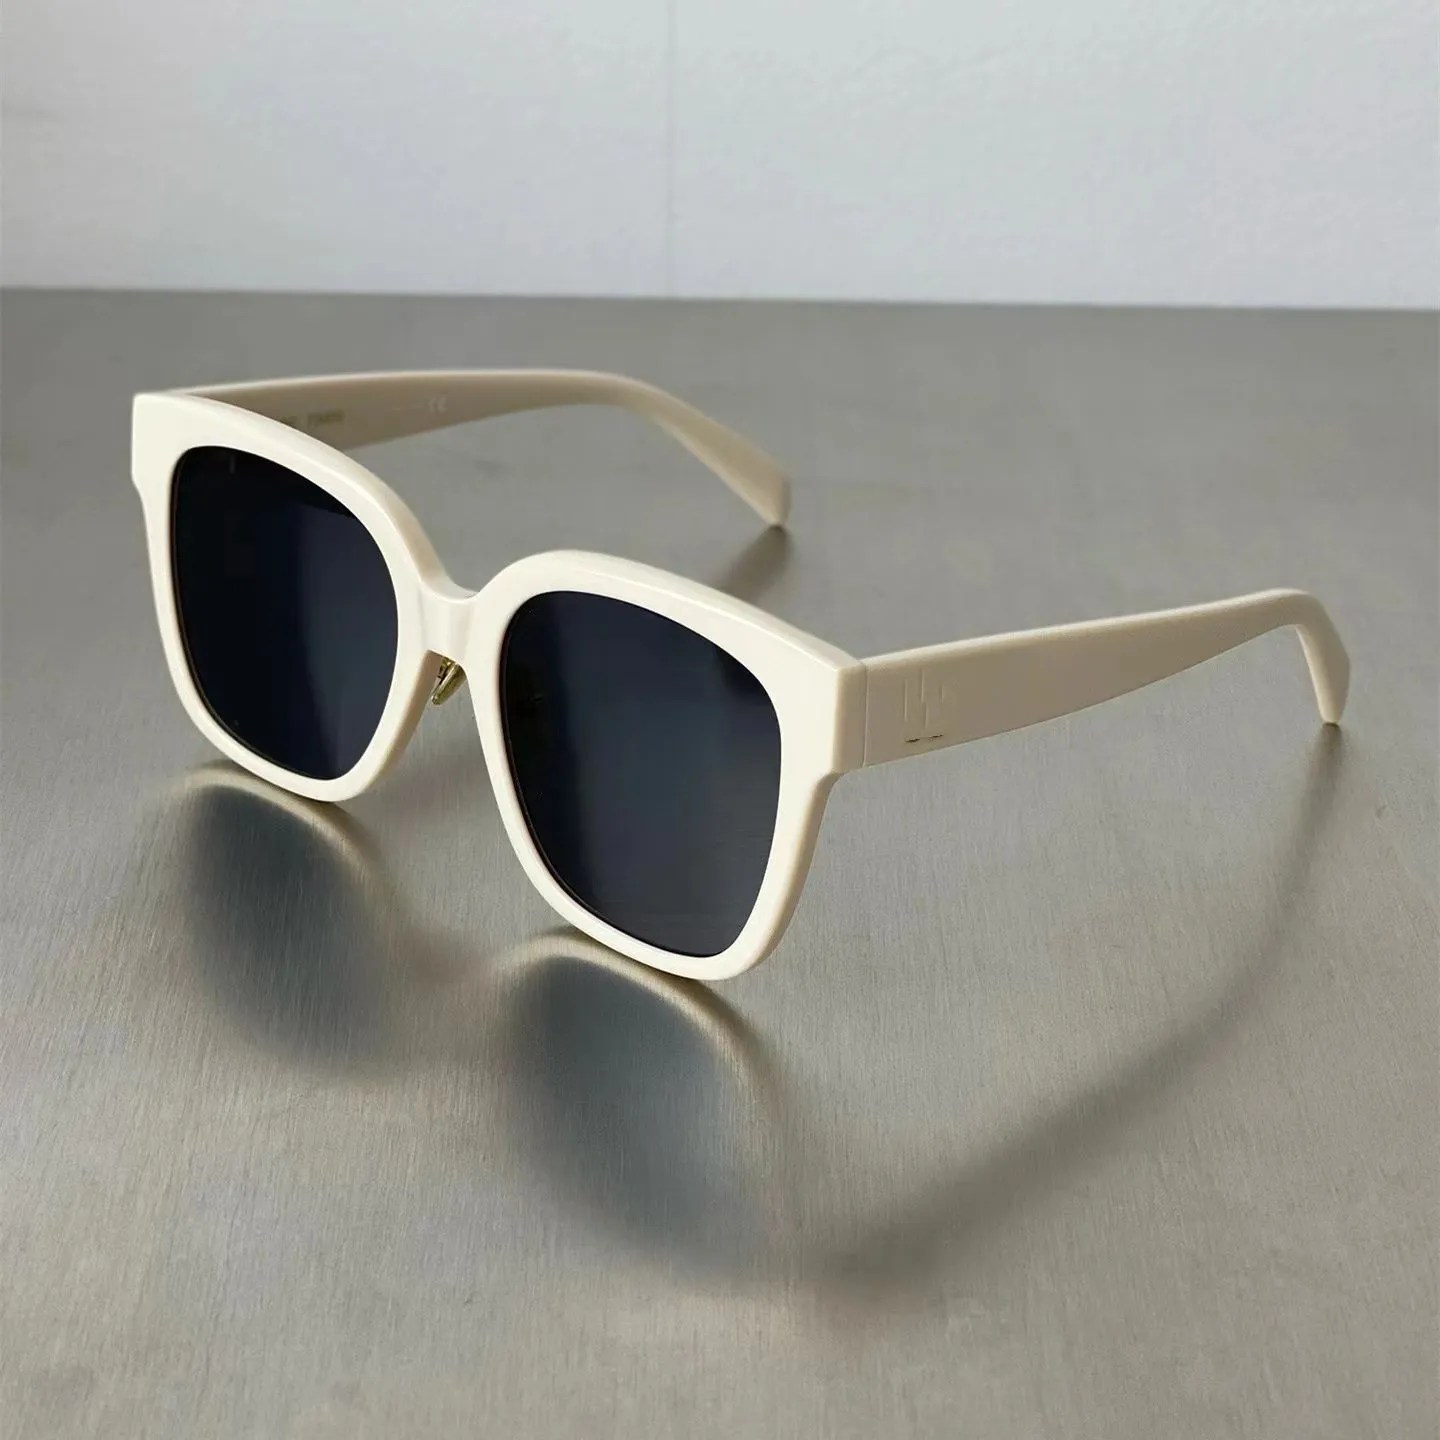 High End Sunglasses Box Okulary przeciwsłoneczne odporne na UV i modne okulary przeciwsłoneczne